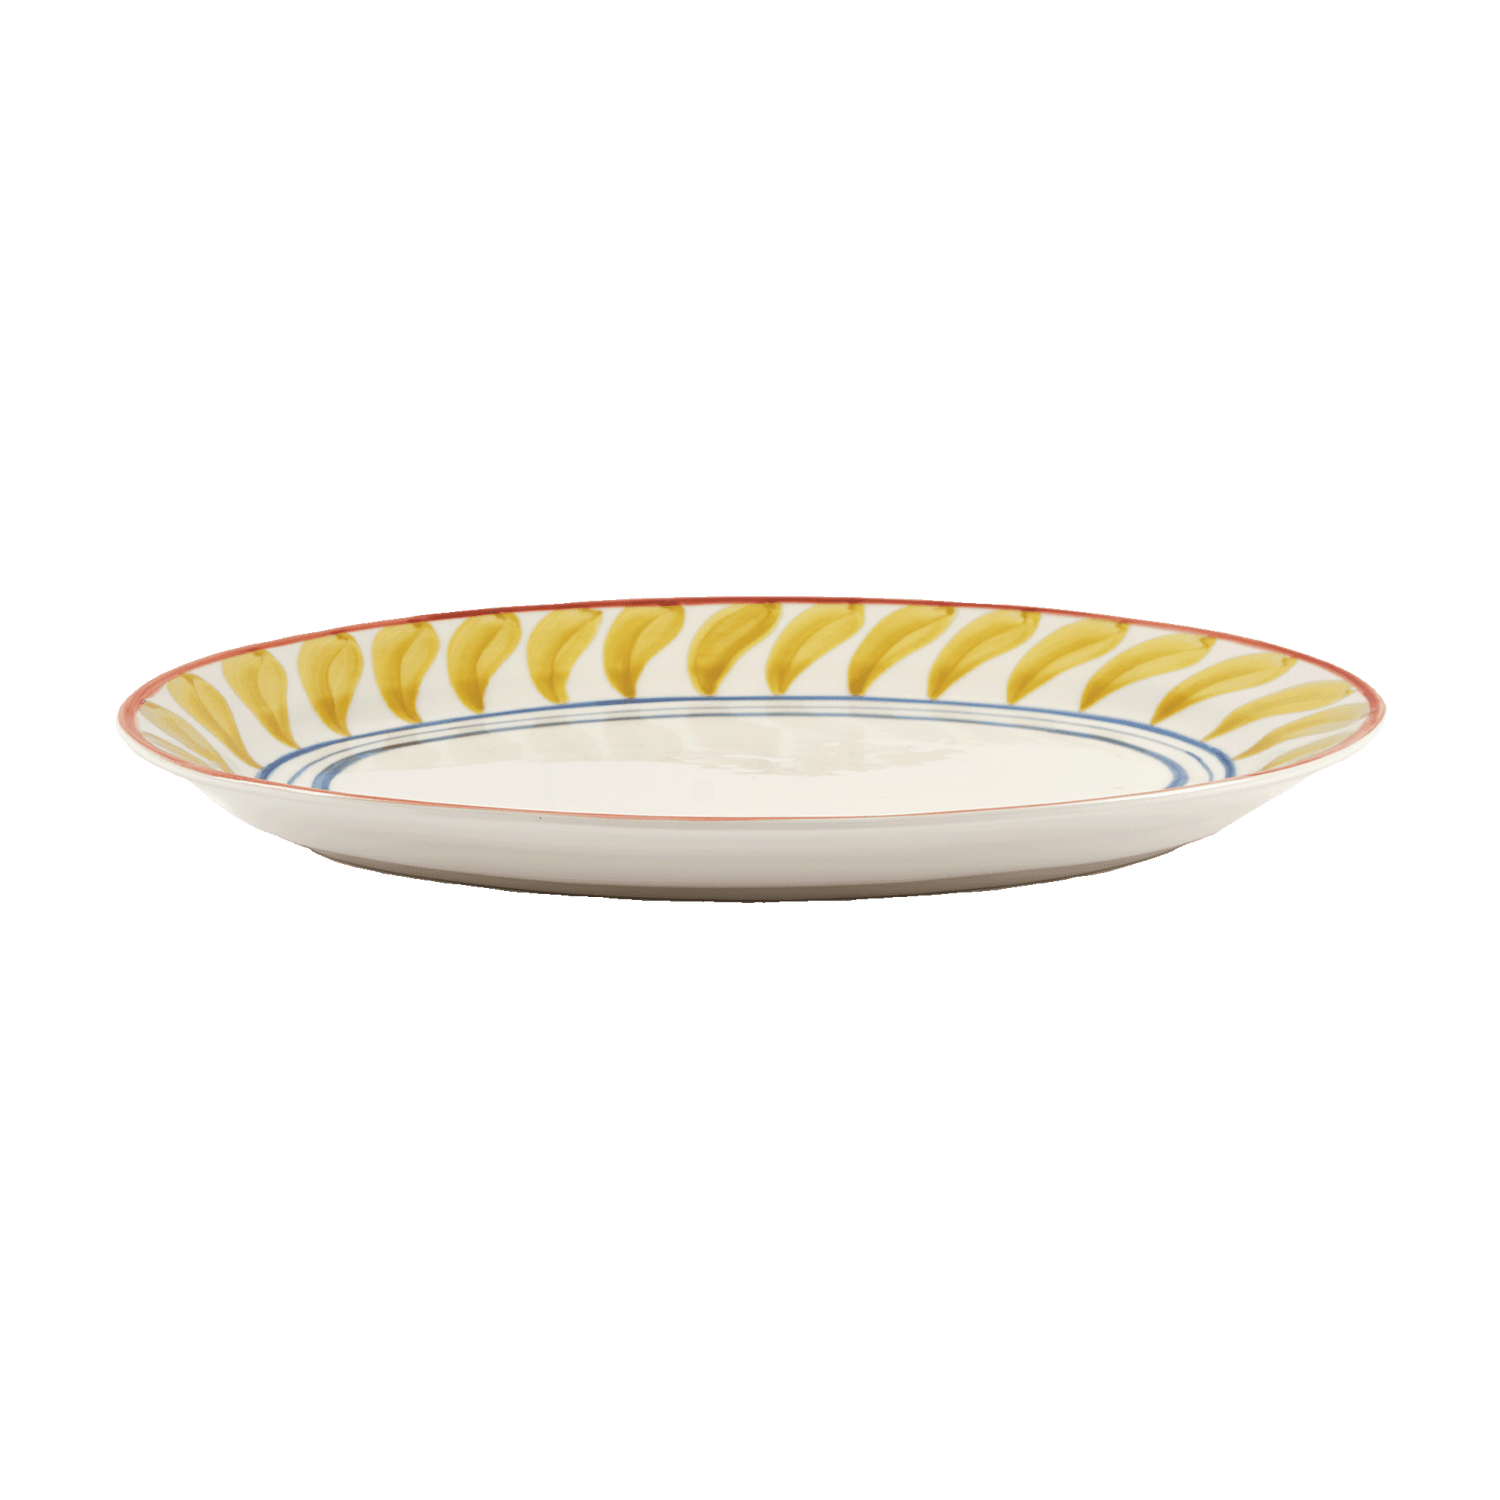 Swirl serving plate - Multi 32 cm